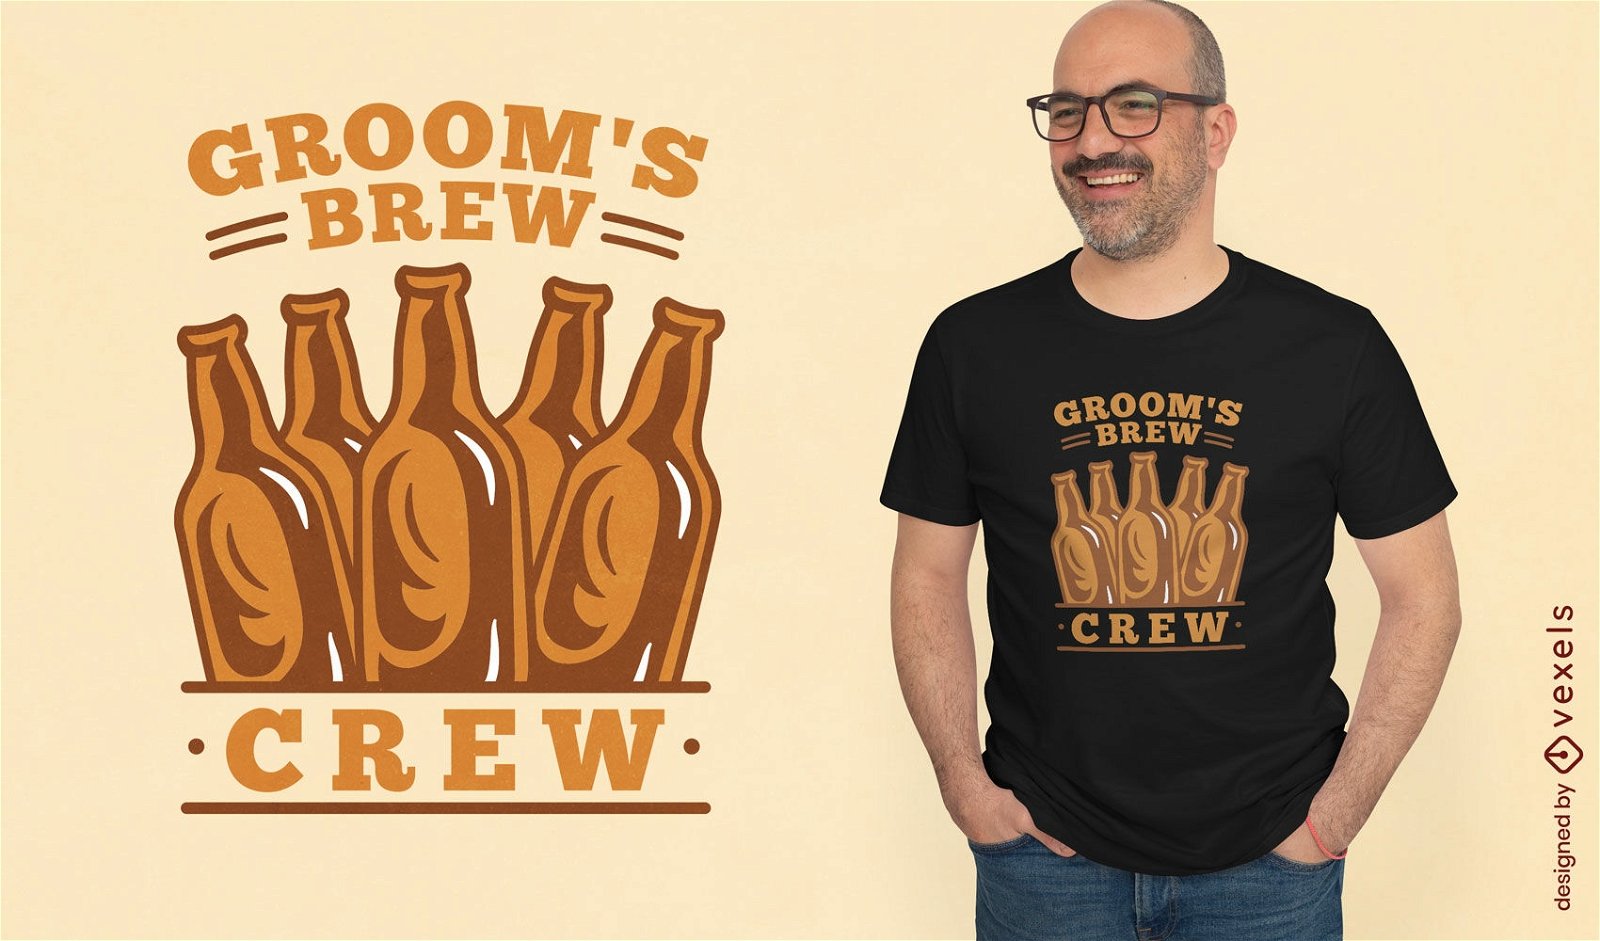 Groom's special brew t-shirt design